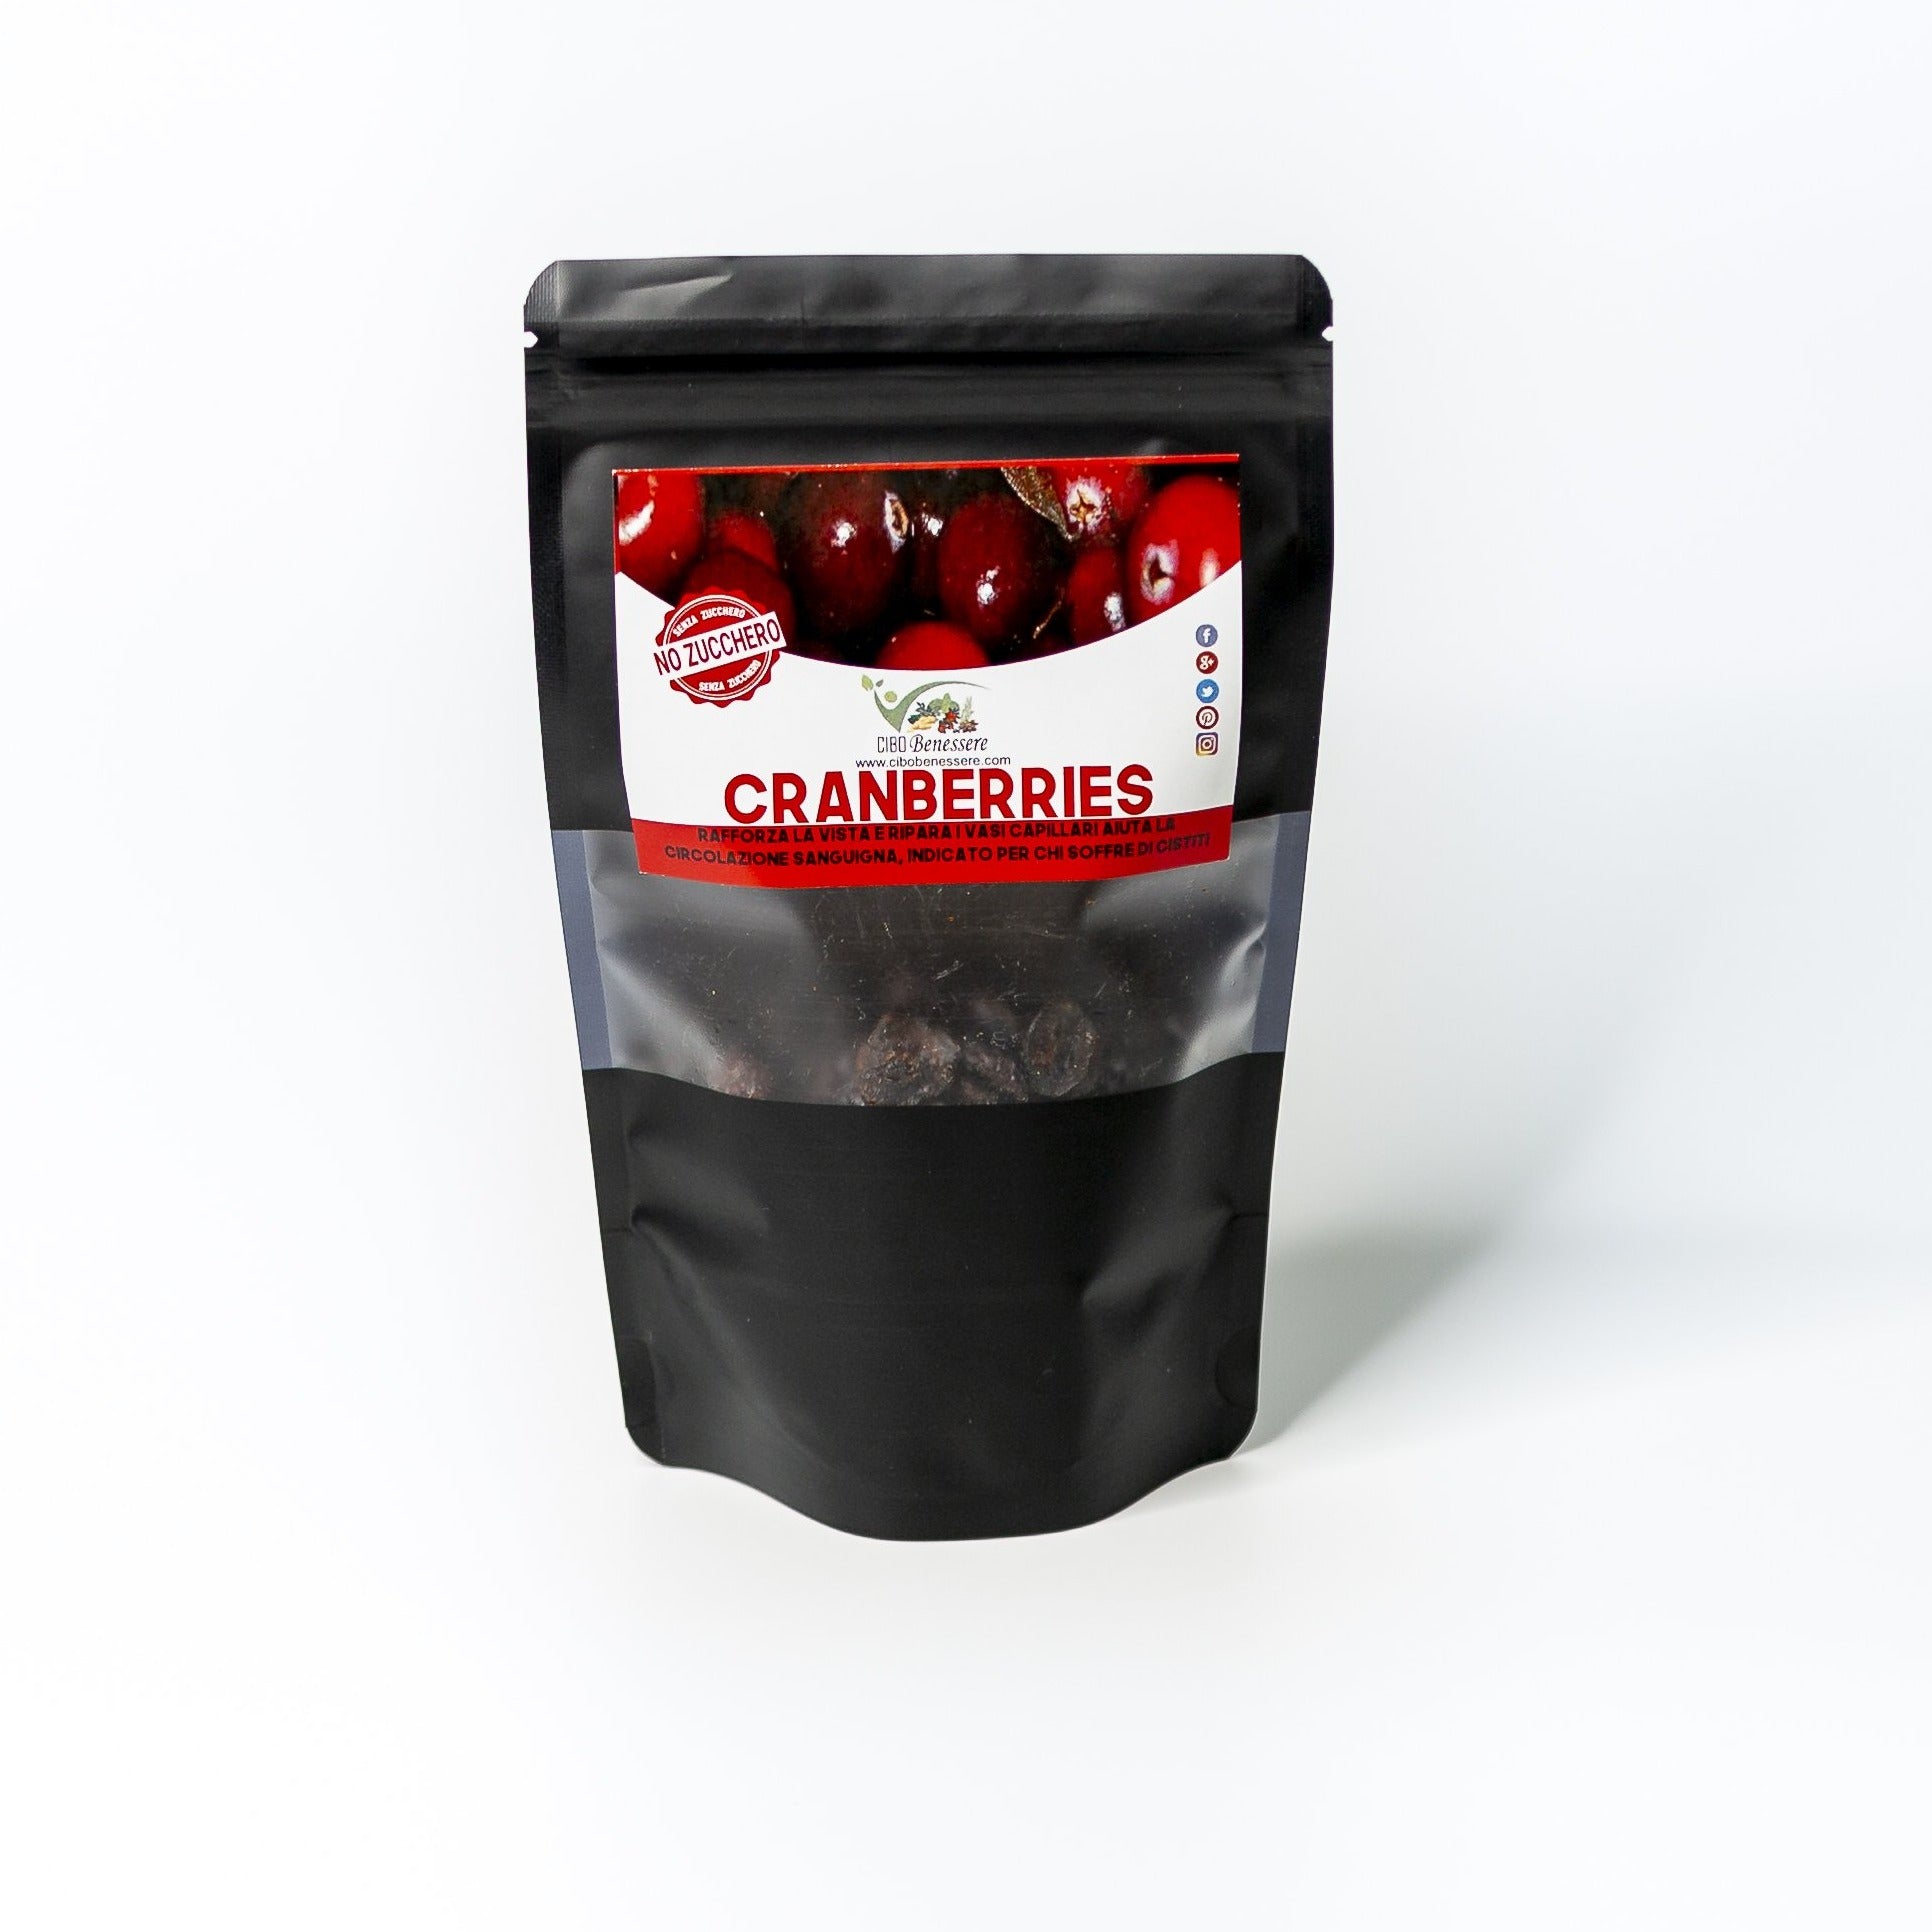 Cranberries - mirtillo rosso